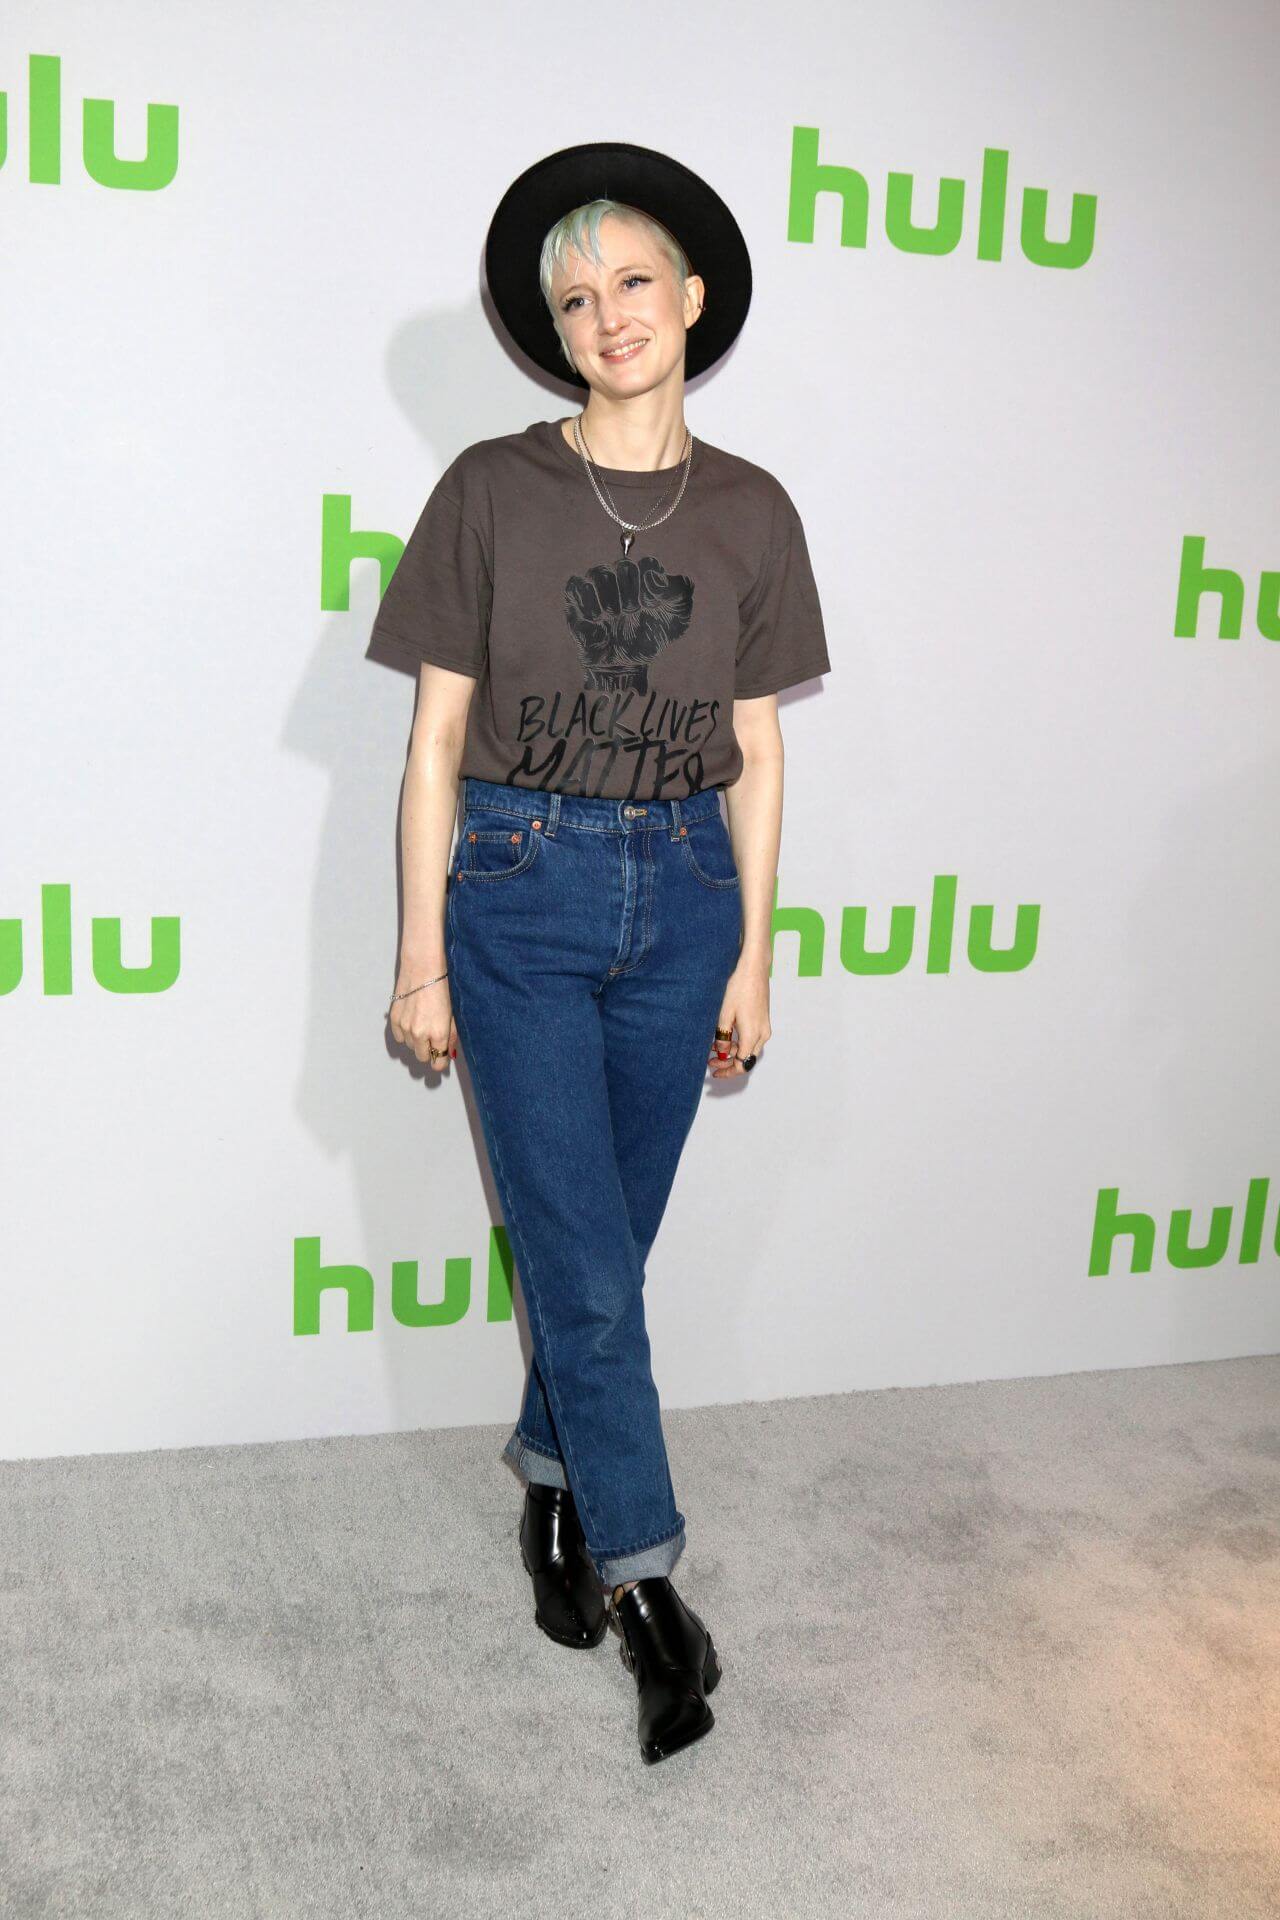 Andrea Riseborough In  Brown T-shirt & Blue Denim Jeans With Black Hat At HULU TCA Winter Photo Call in Pasadena